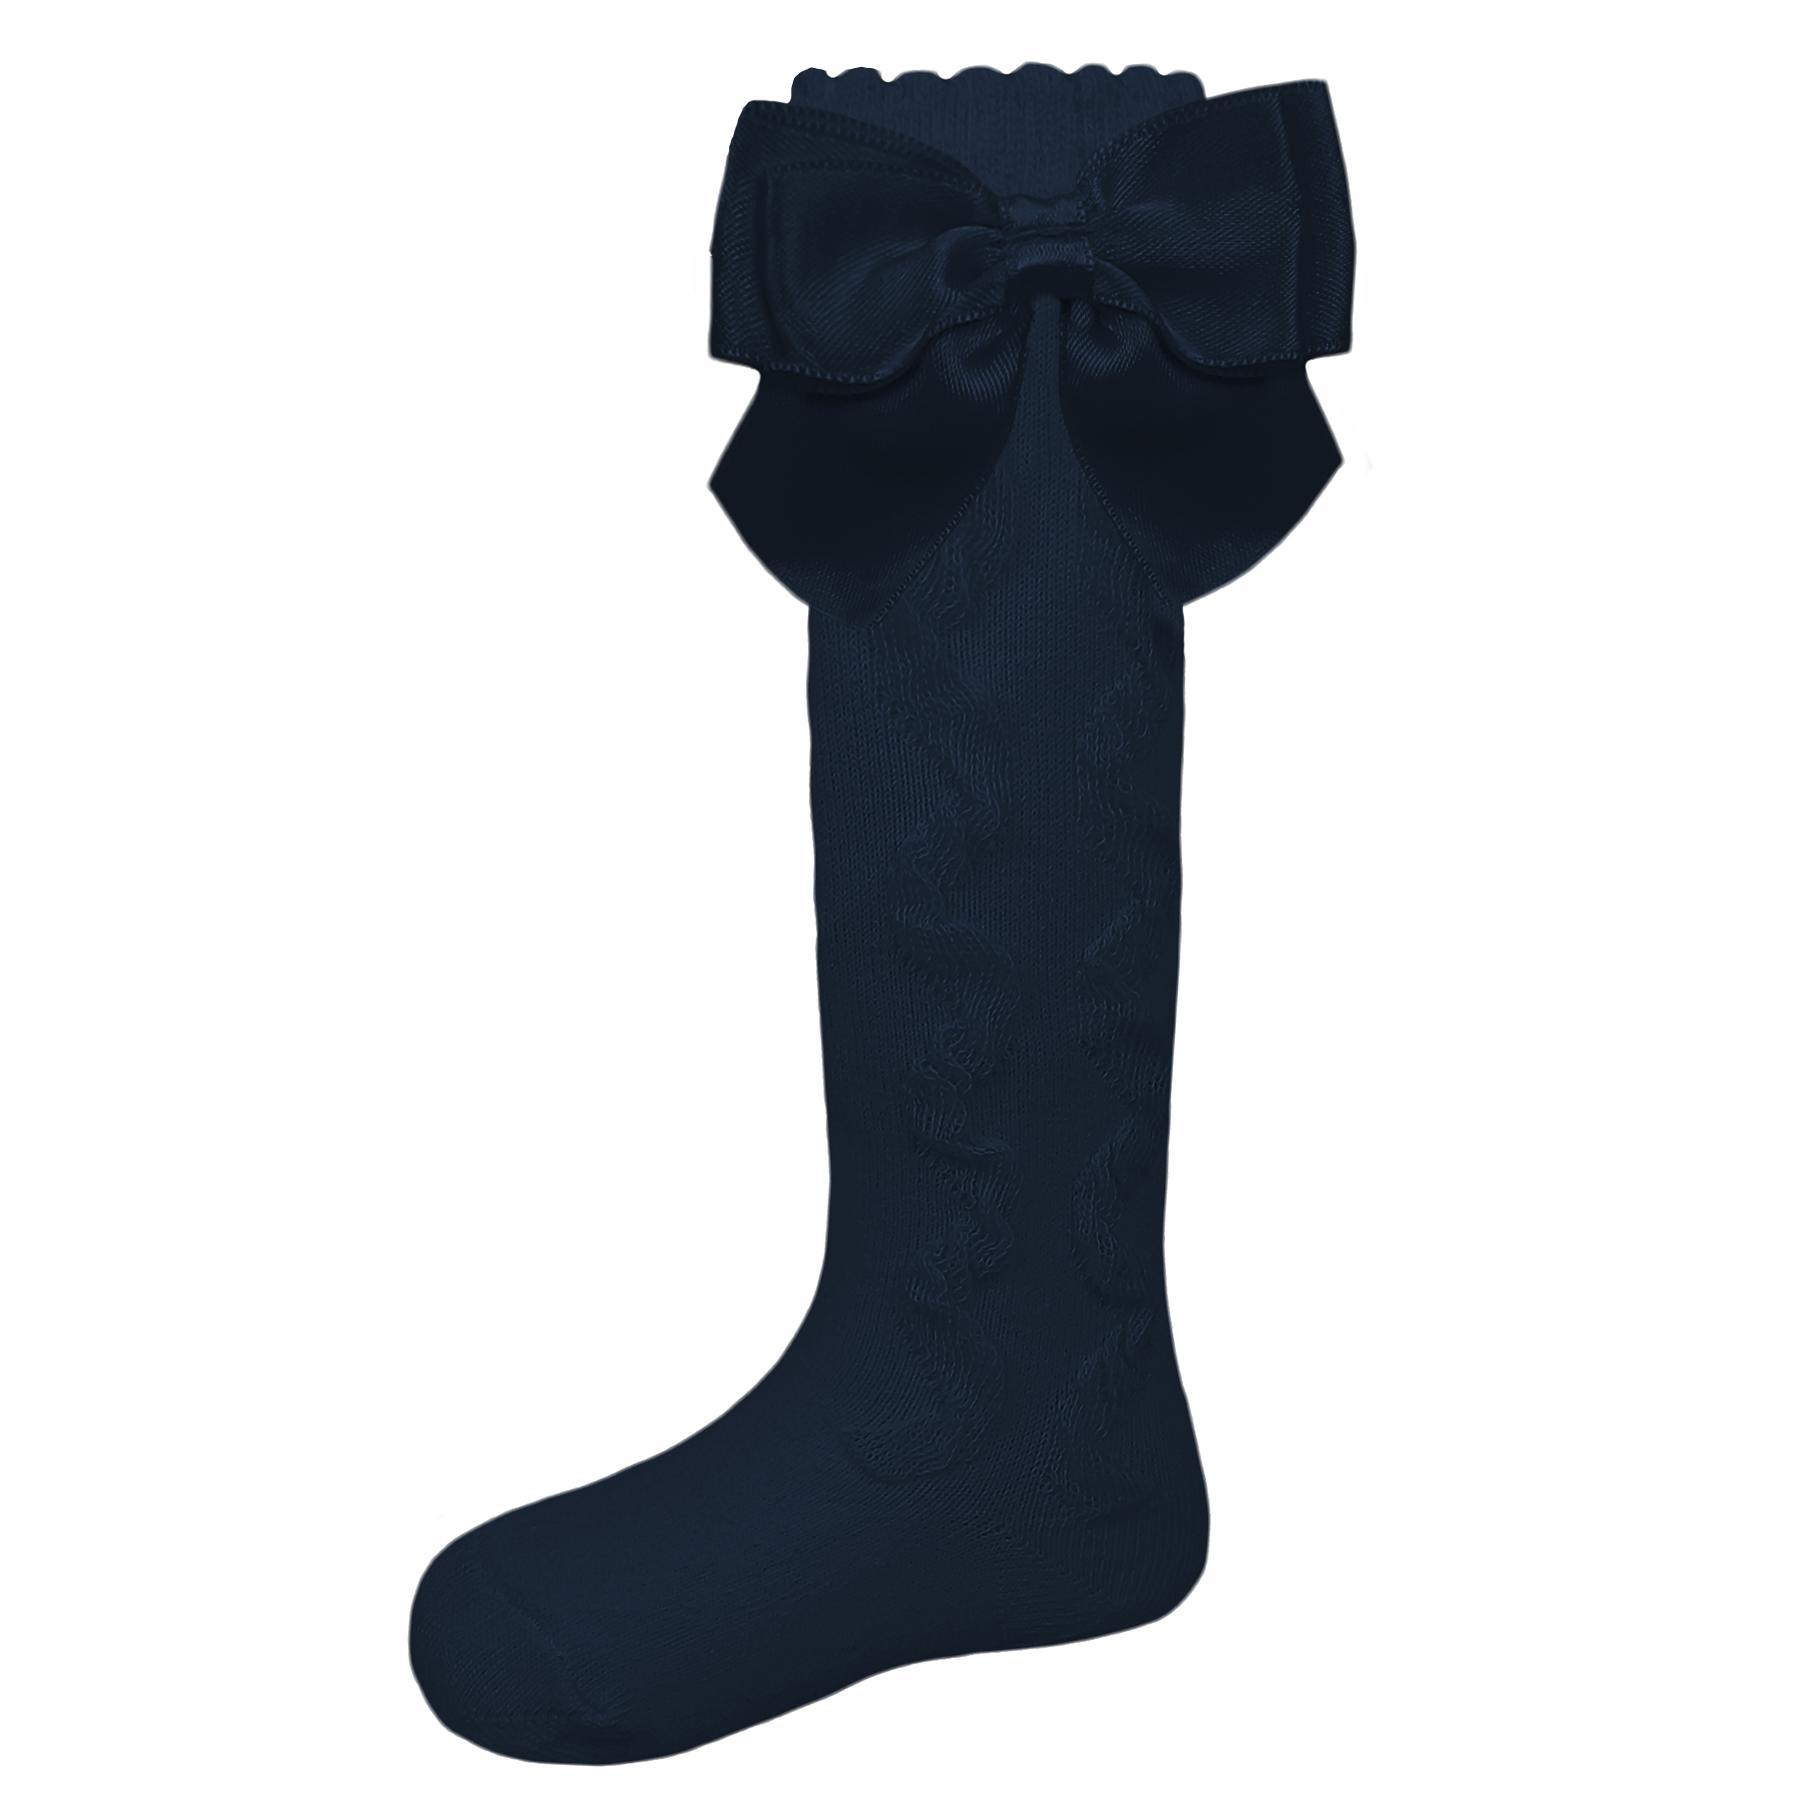 Pex Kids Grazia Knee High Side Bow Ruffle Socks in Navy